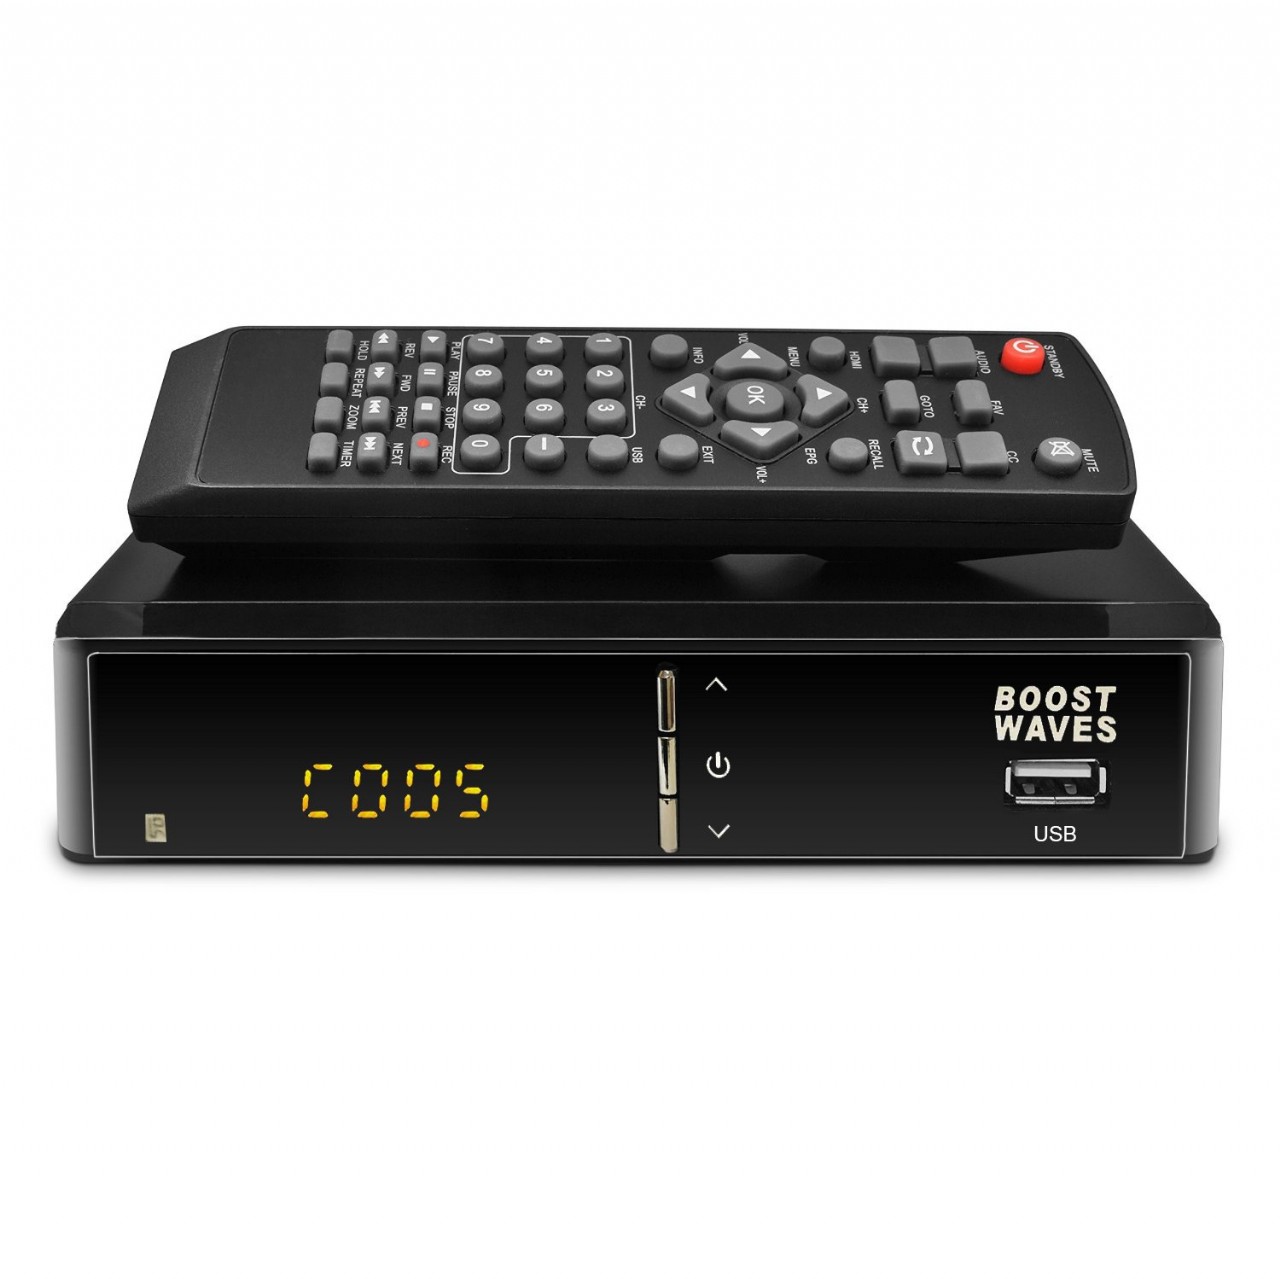 BoostWaves Premium Digital Converter Box DVR, Full HD 1080P HDTV, HDMI Output, 7 Day Program Guide